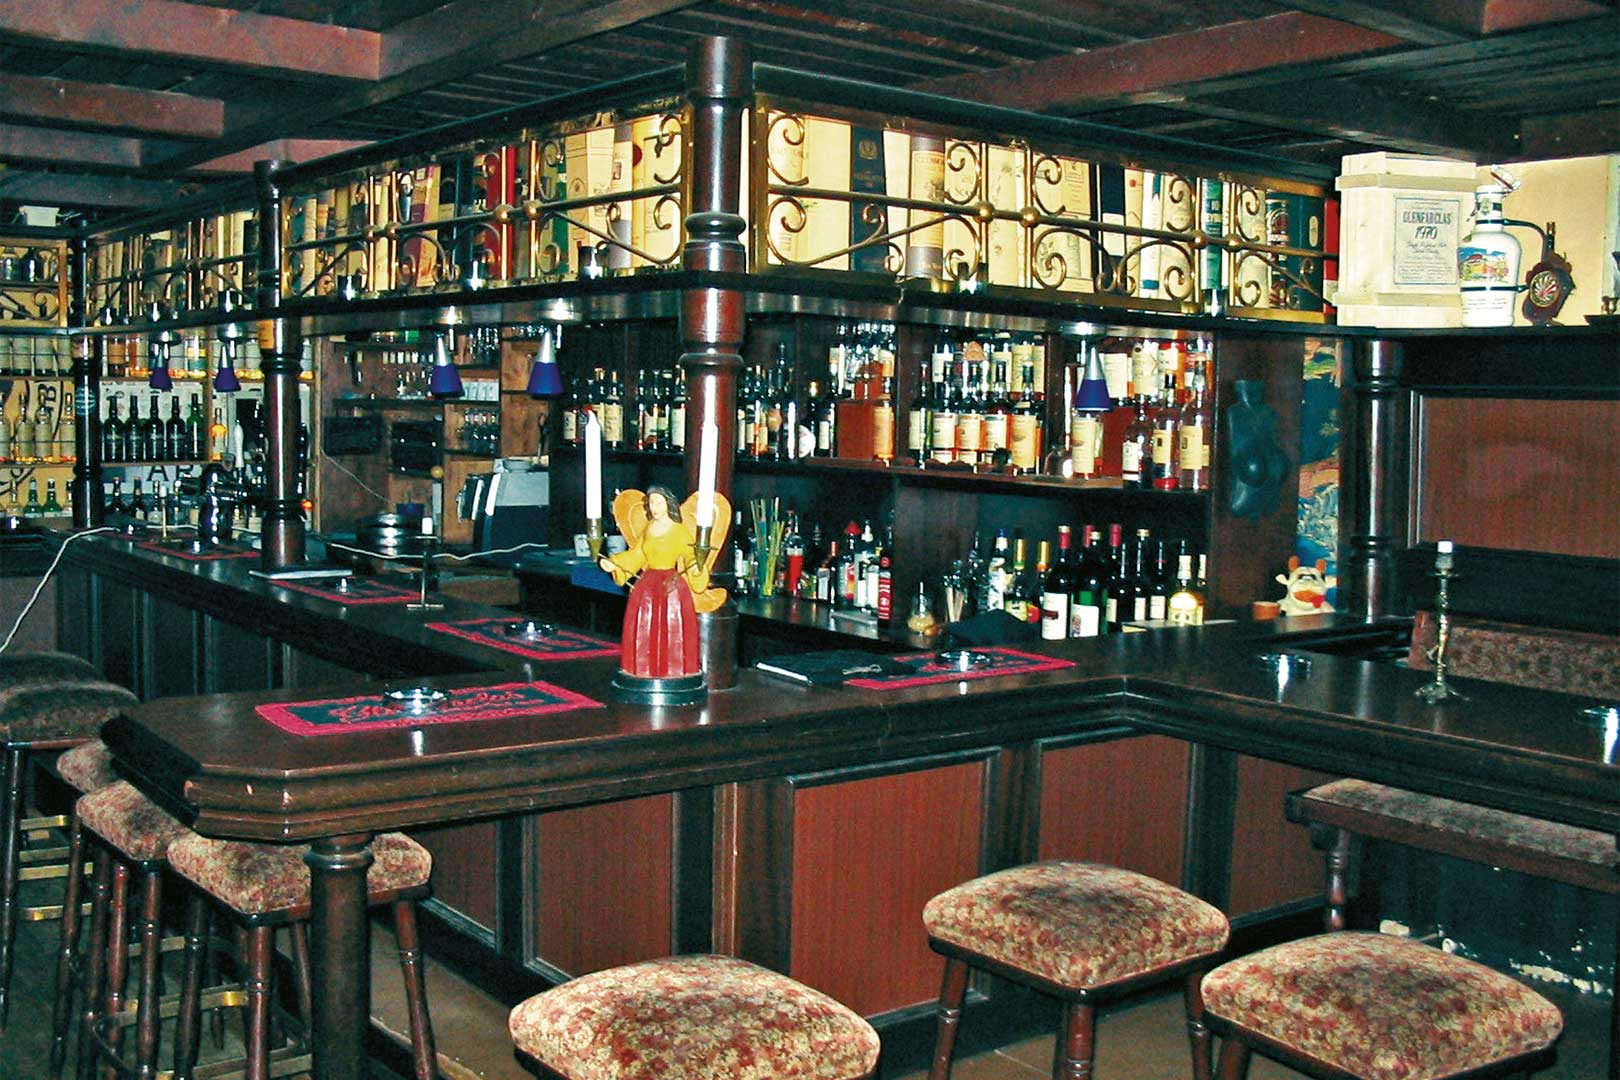 whisky bar einstein – the malt whiskyhouse husum WEB 3 2 1620x1080 xwxcggcf